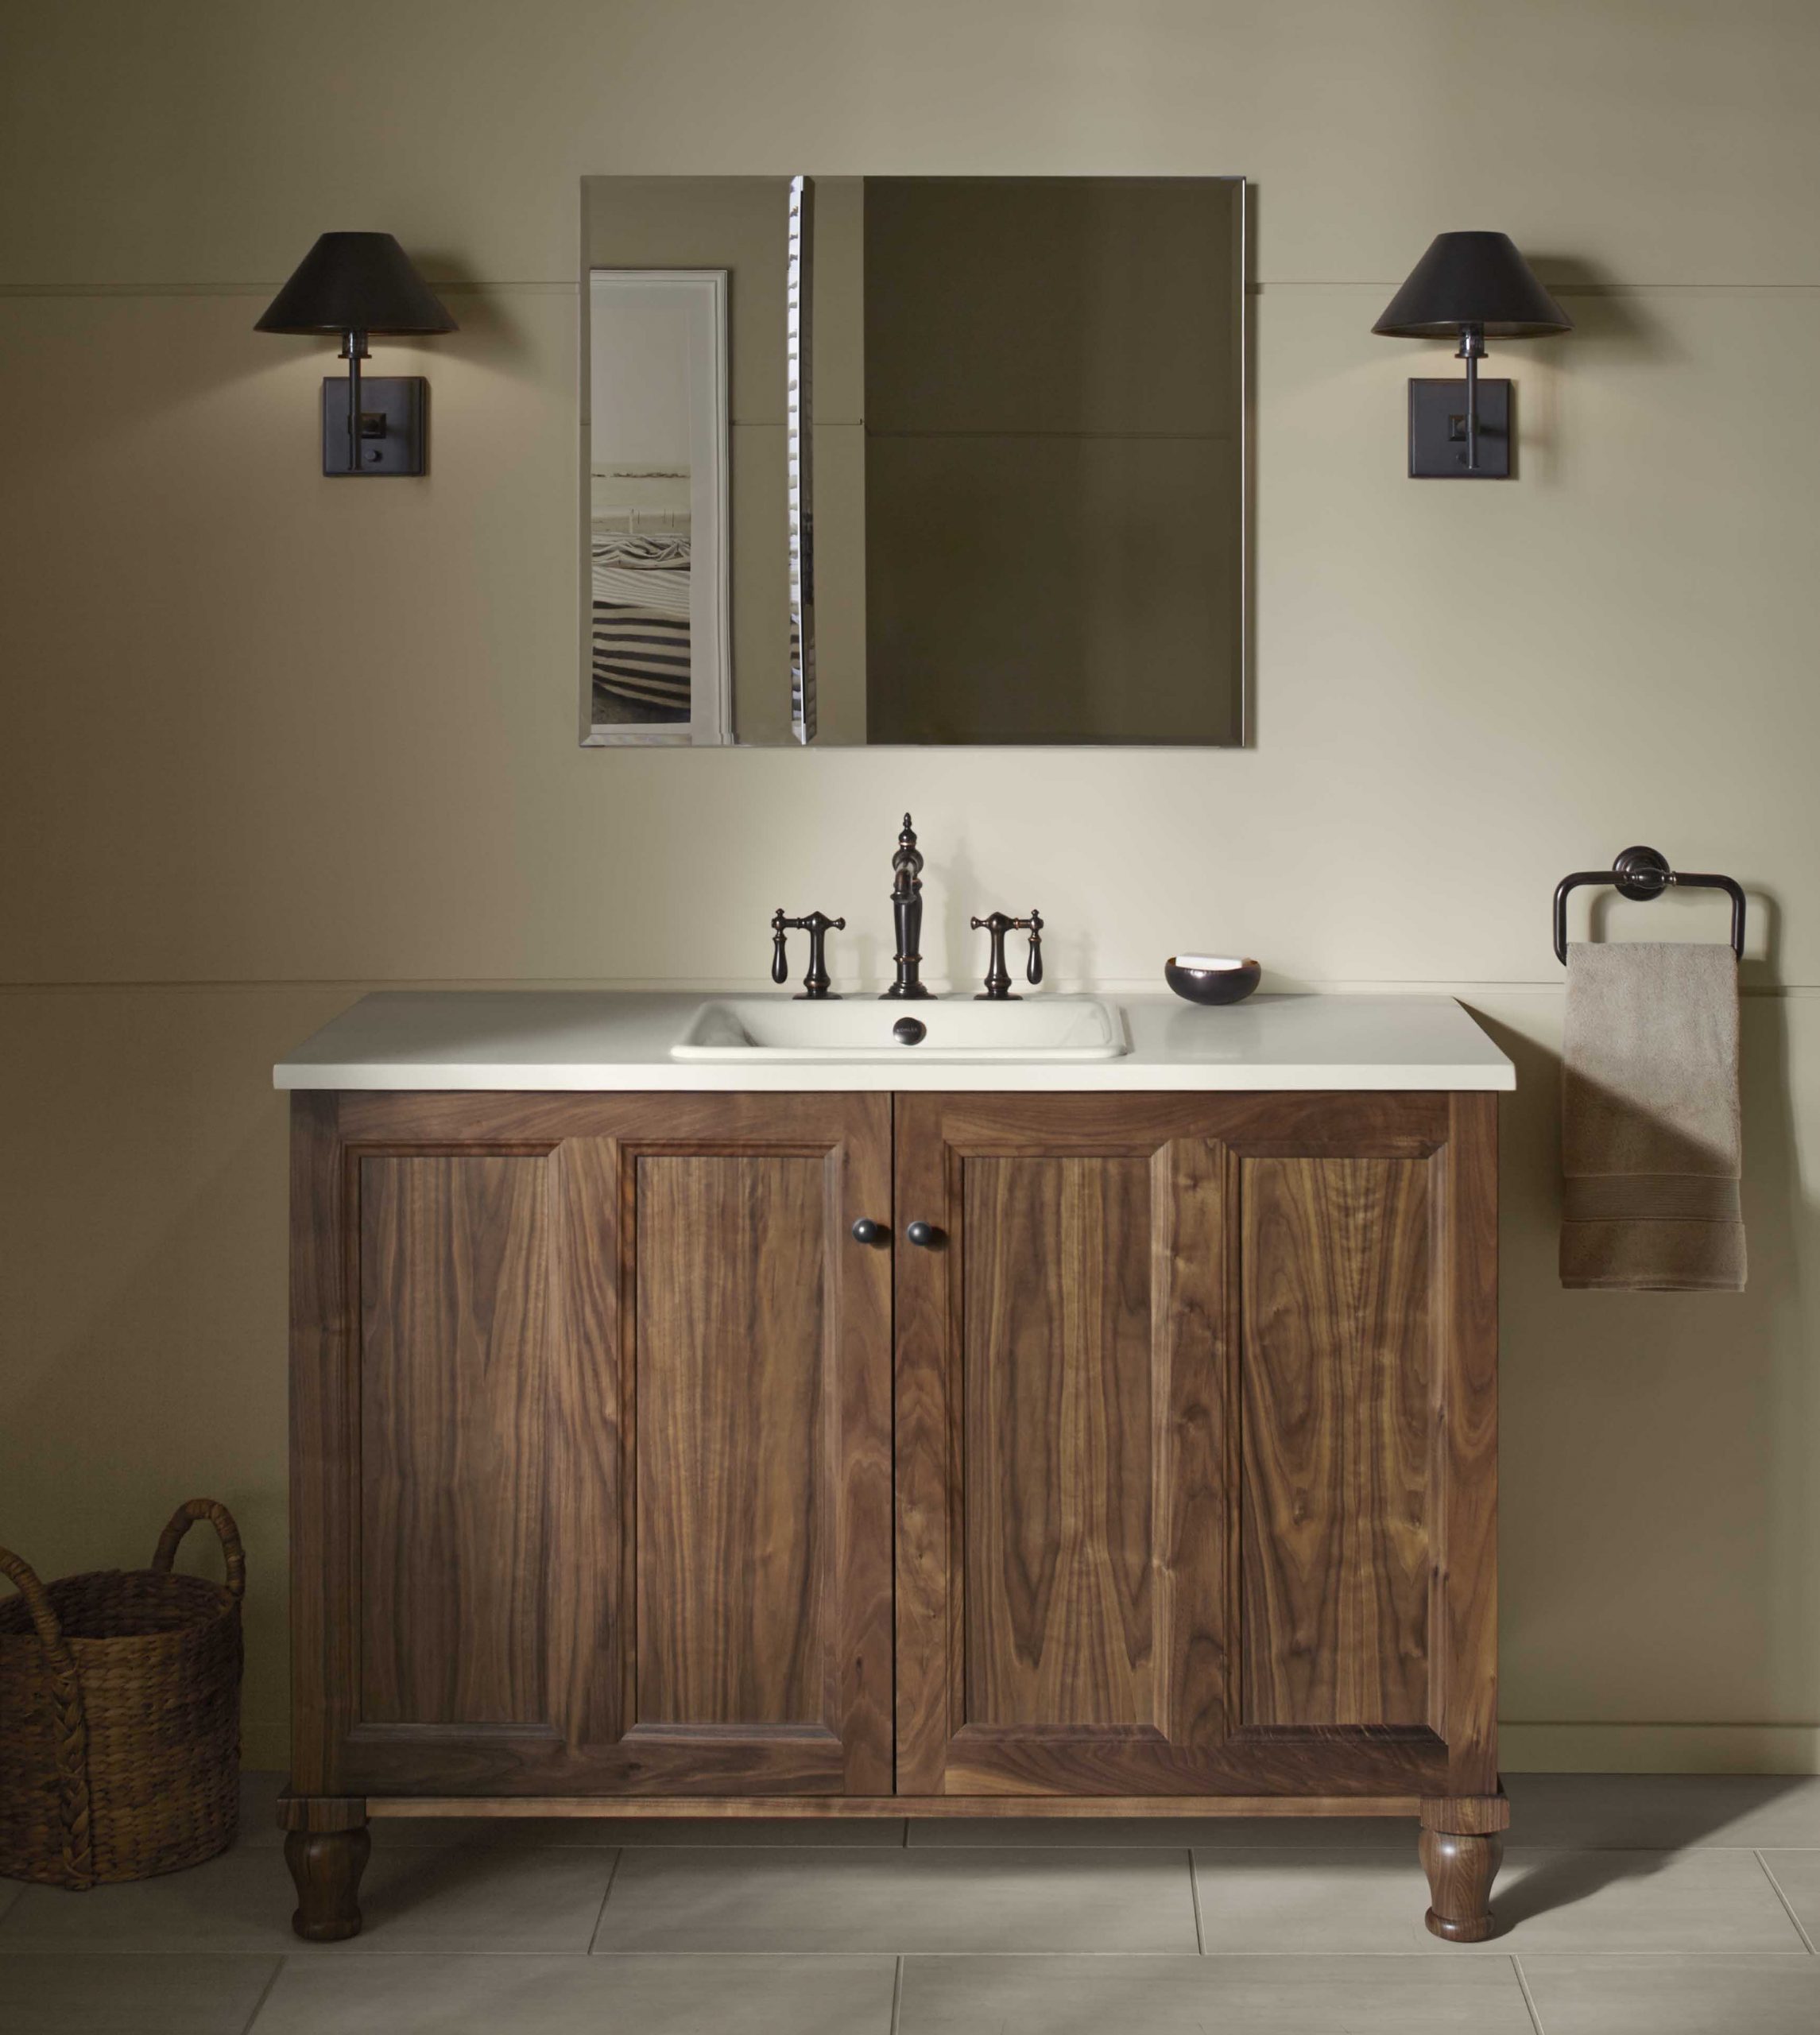 Mid-Century Modern style bathroom with wood vanity